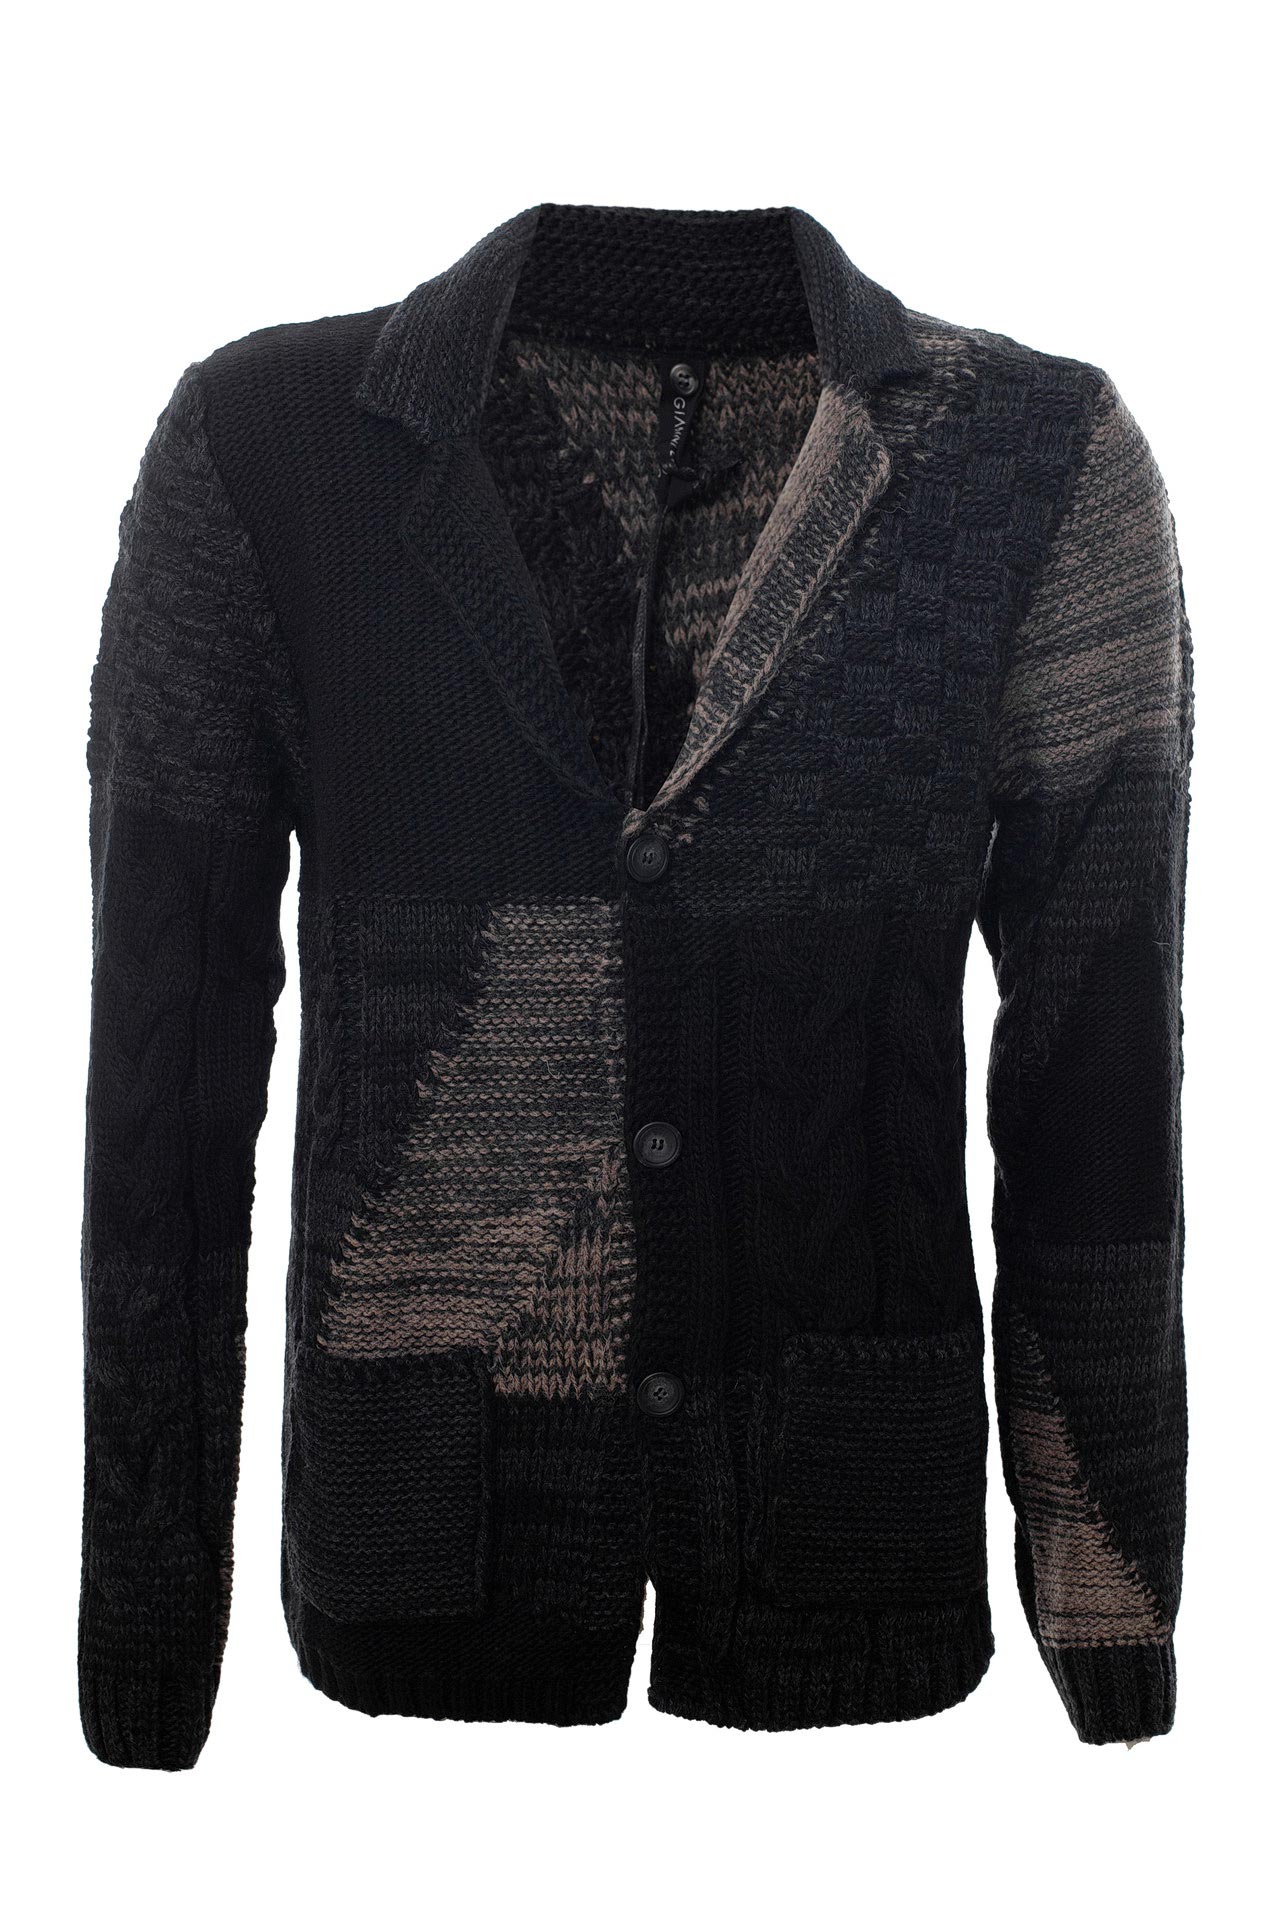 Одежда мужская Кардиган GIANNI LUPO (BW580/18.1). Купить за 7700 руб.